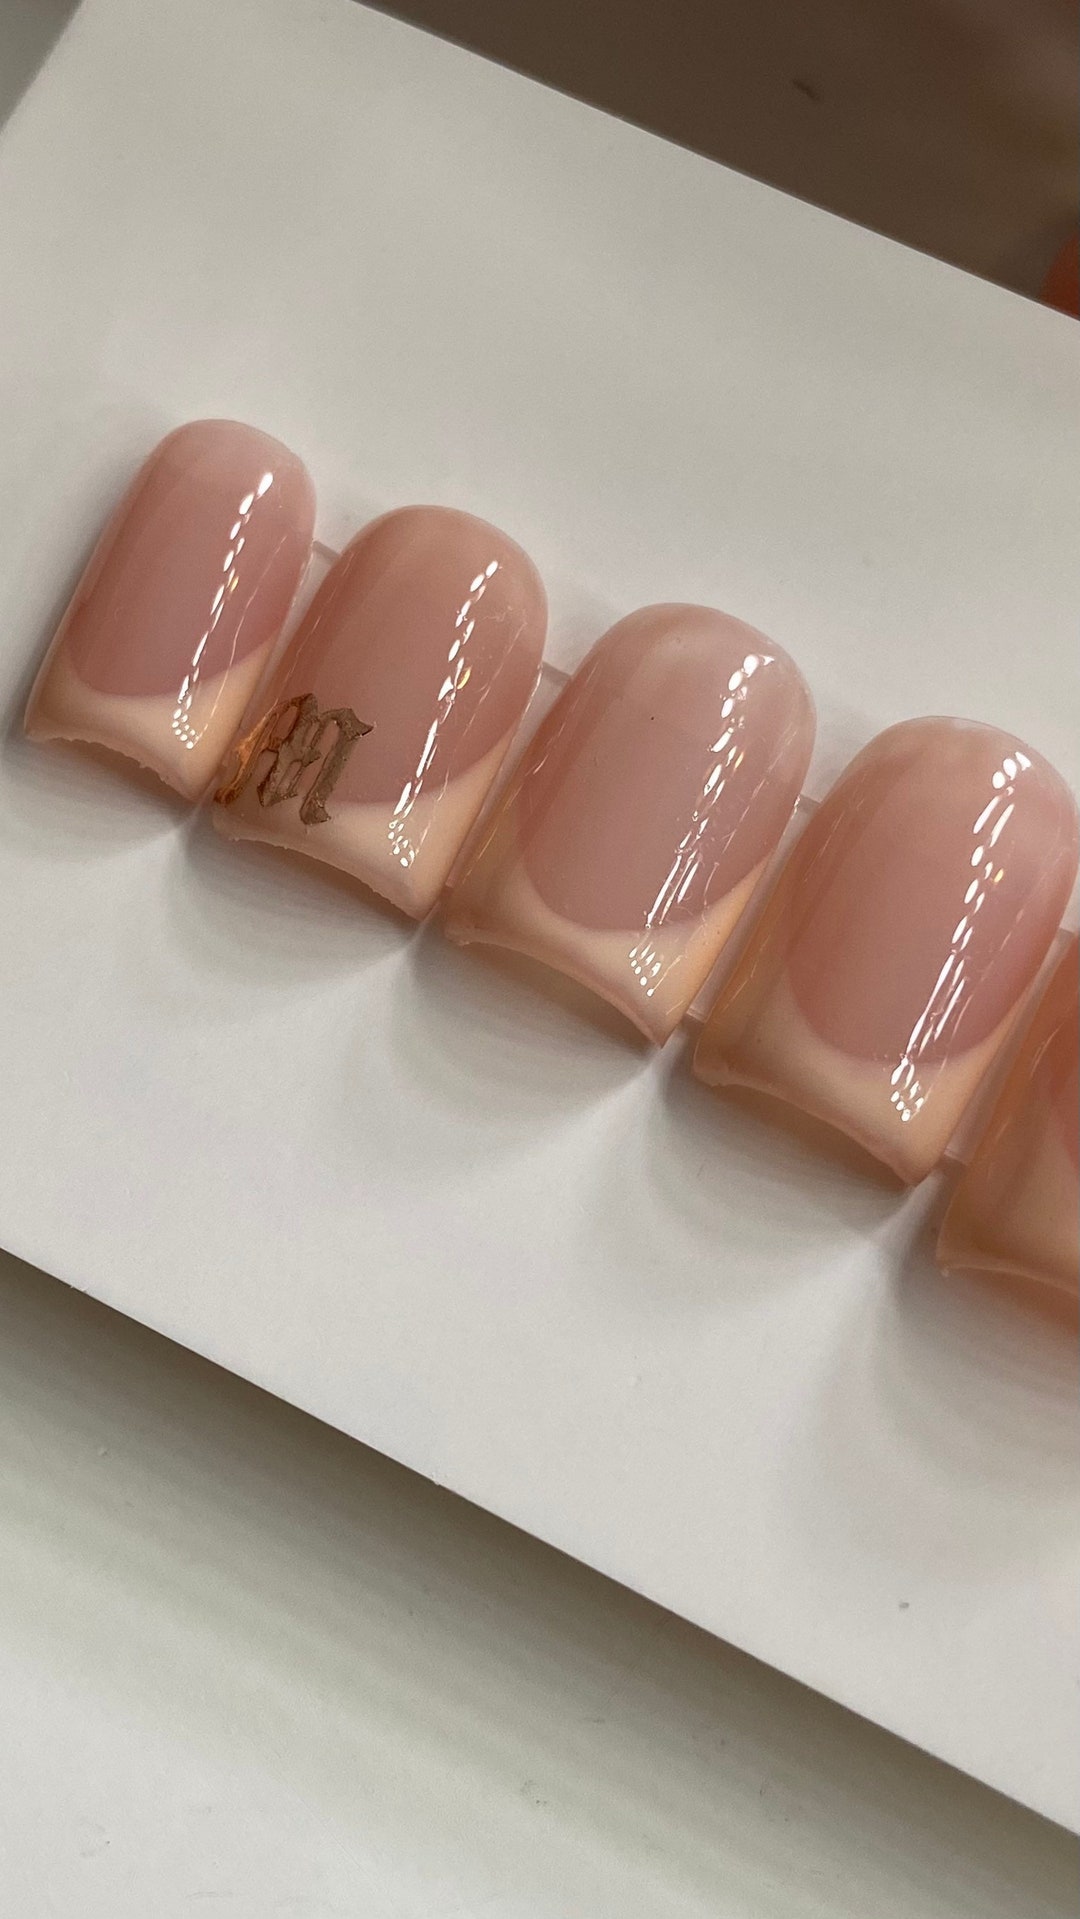 YoYoee Press on Nails Short Black French Fake Nails Almond Cute Tips  Acrylics F | eBay